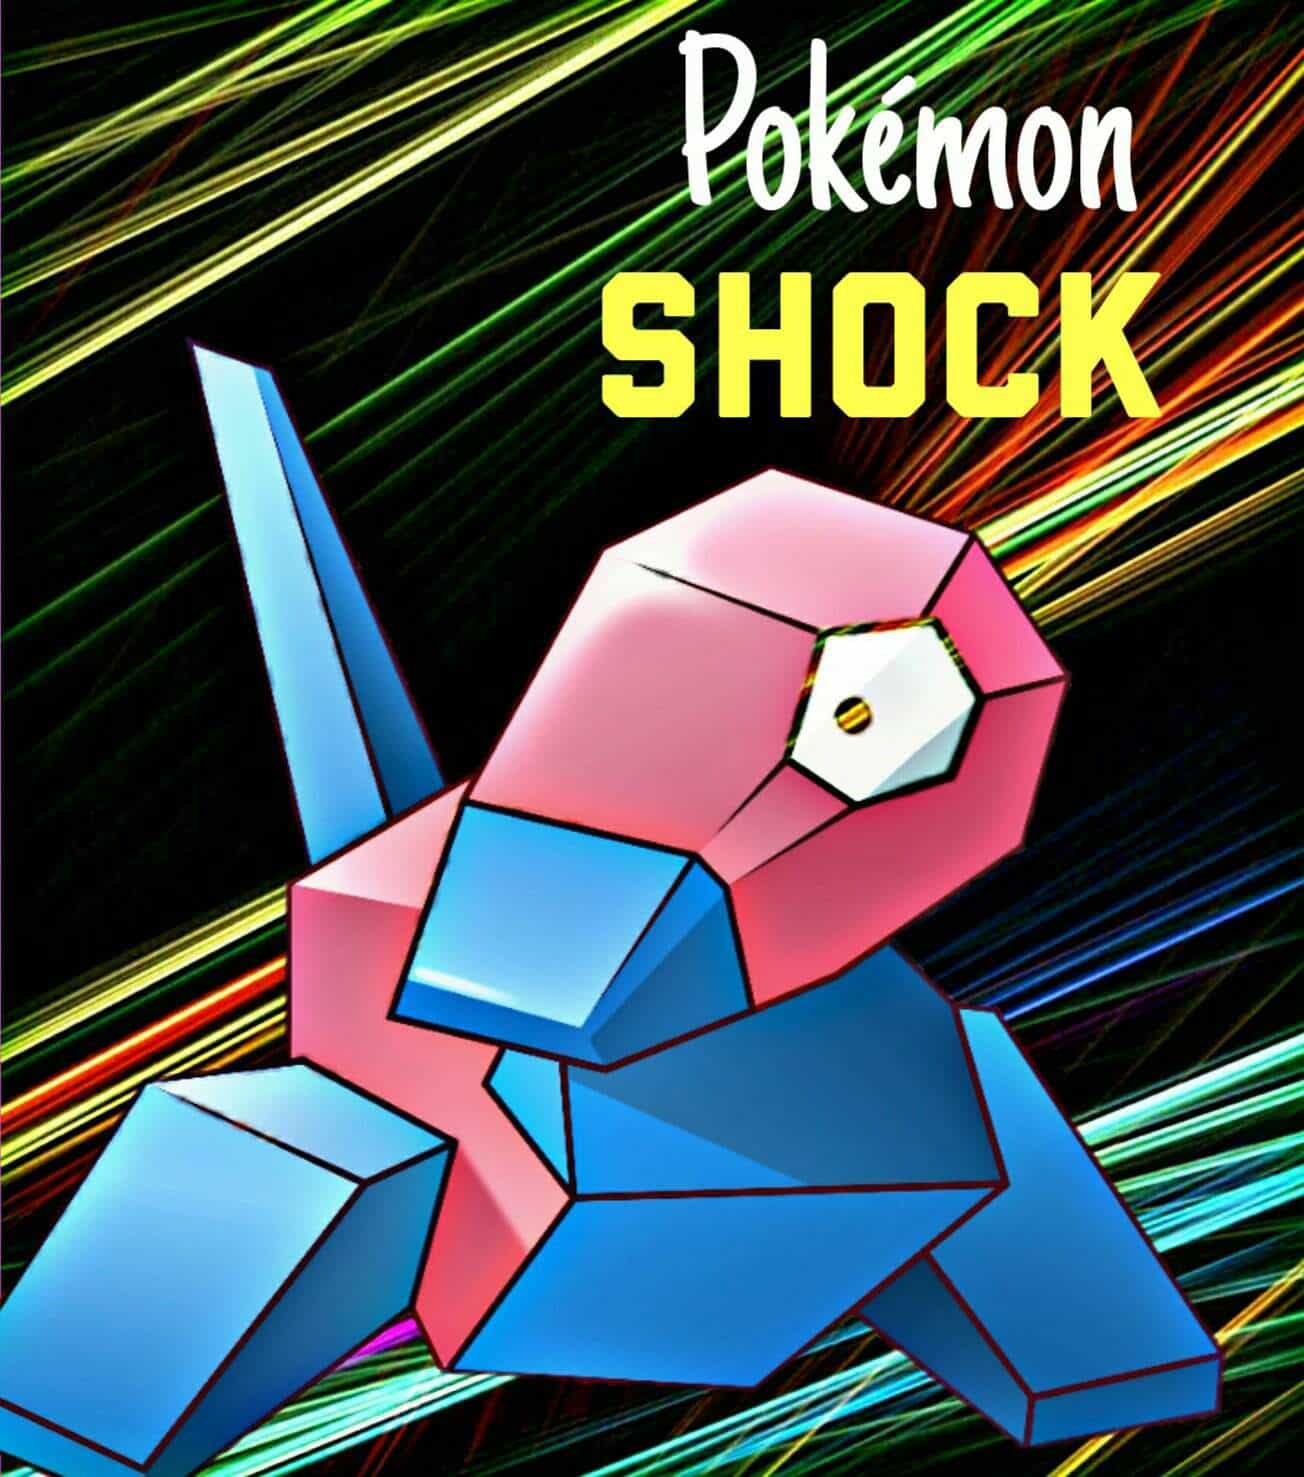 Pokemon shock